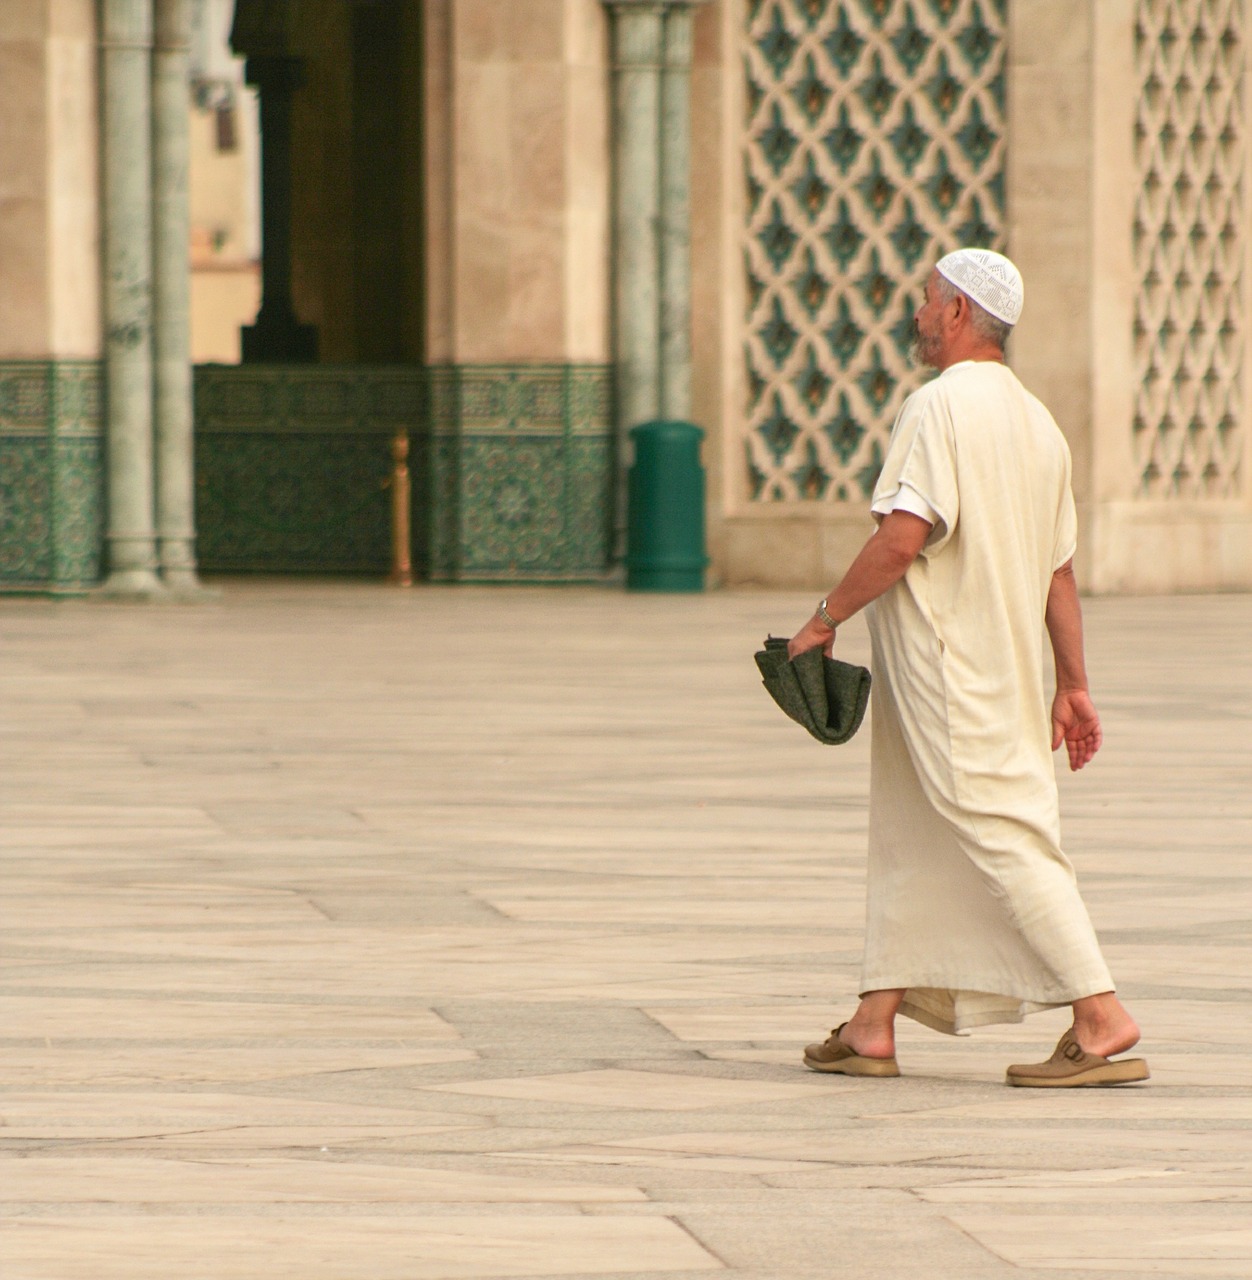 morocco casablanca mosque free photo